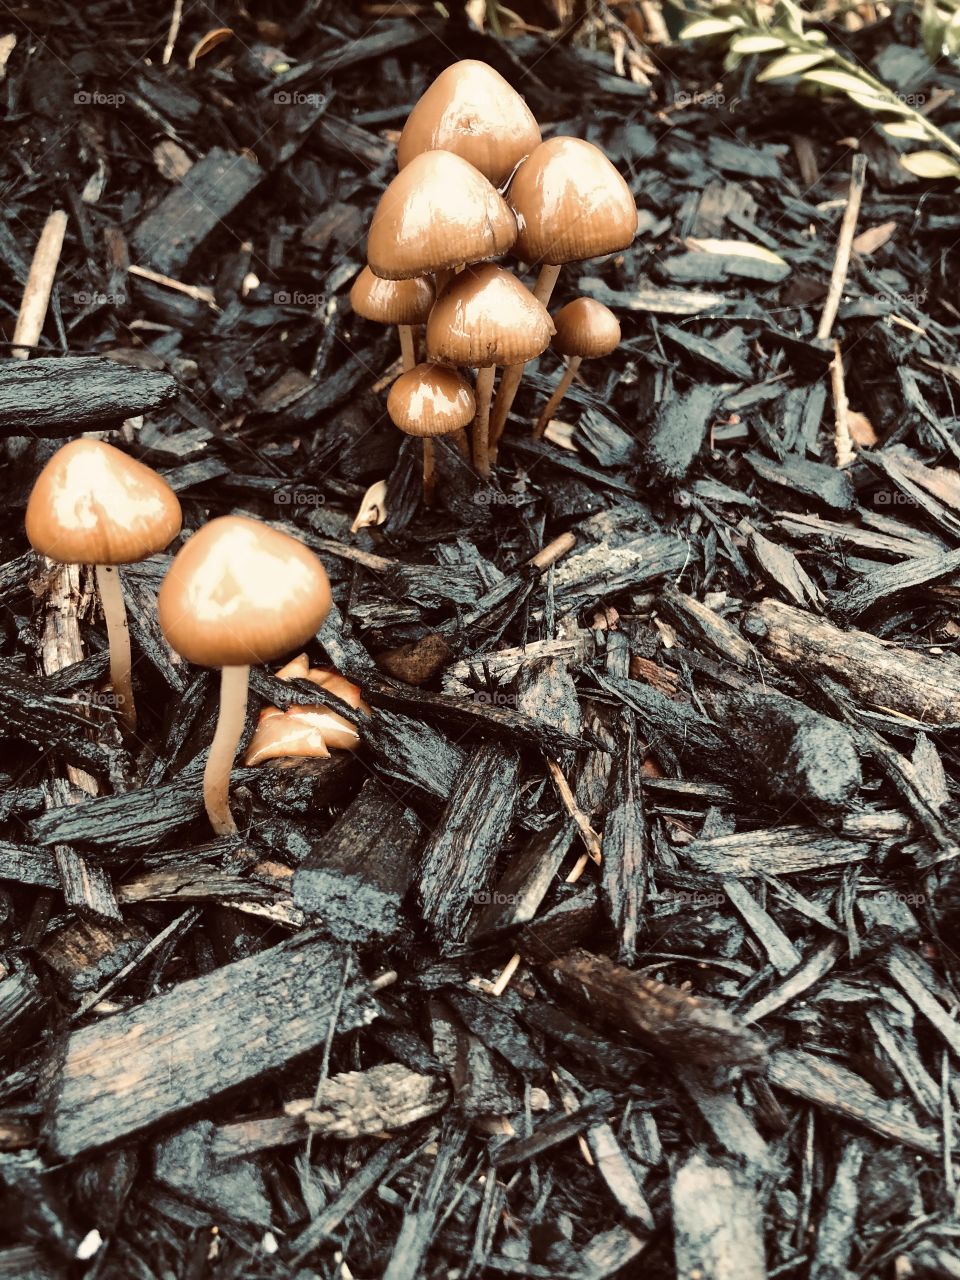 Wet wild mushrooms breaking through mulch